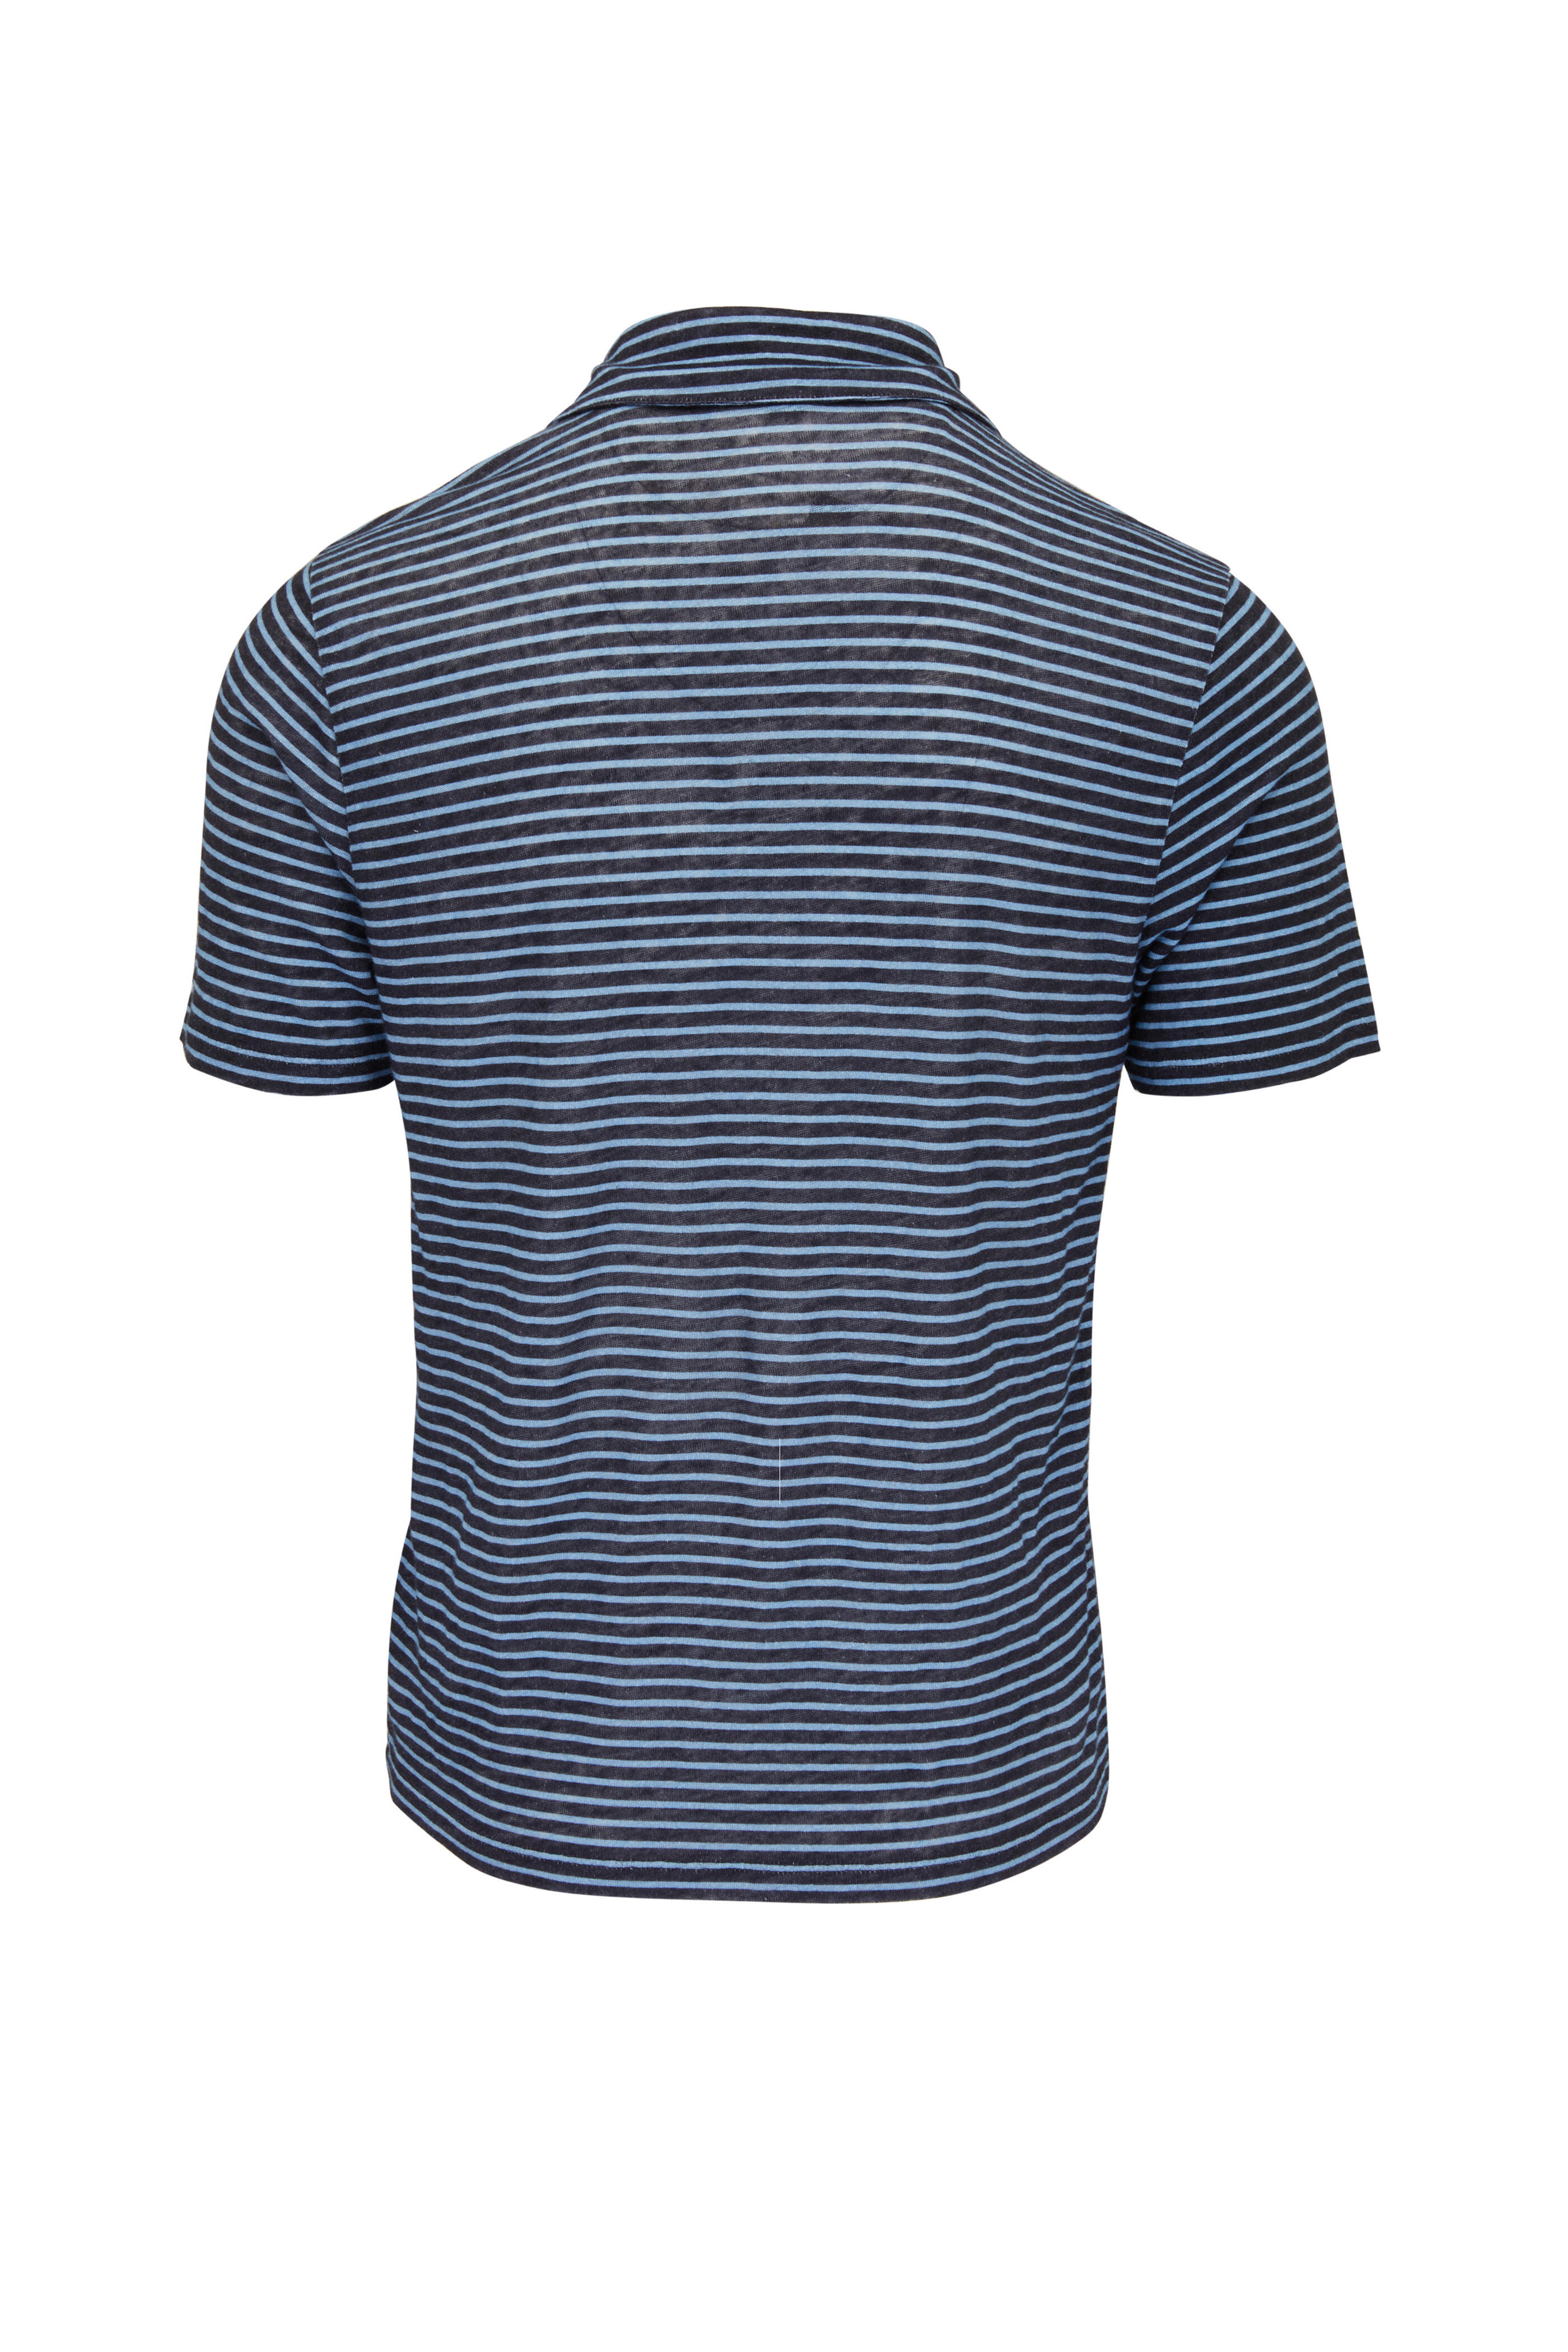 Vince - Coastal Blue & Delft Striped Short Sleeve Polo